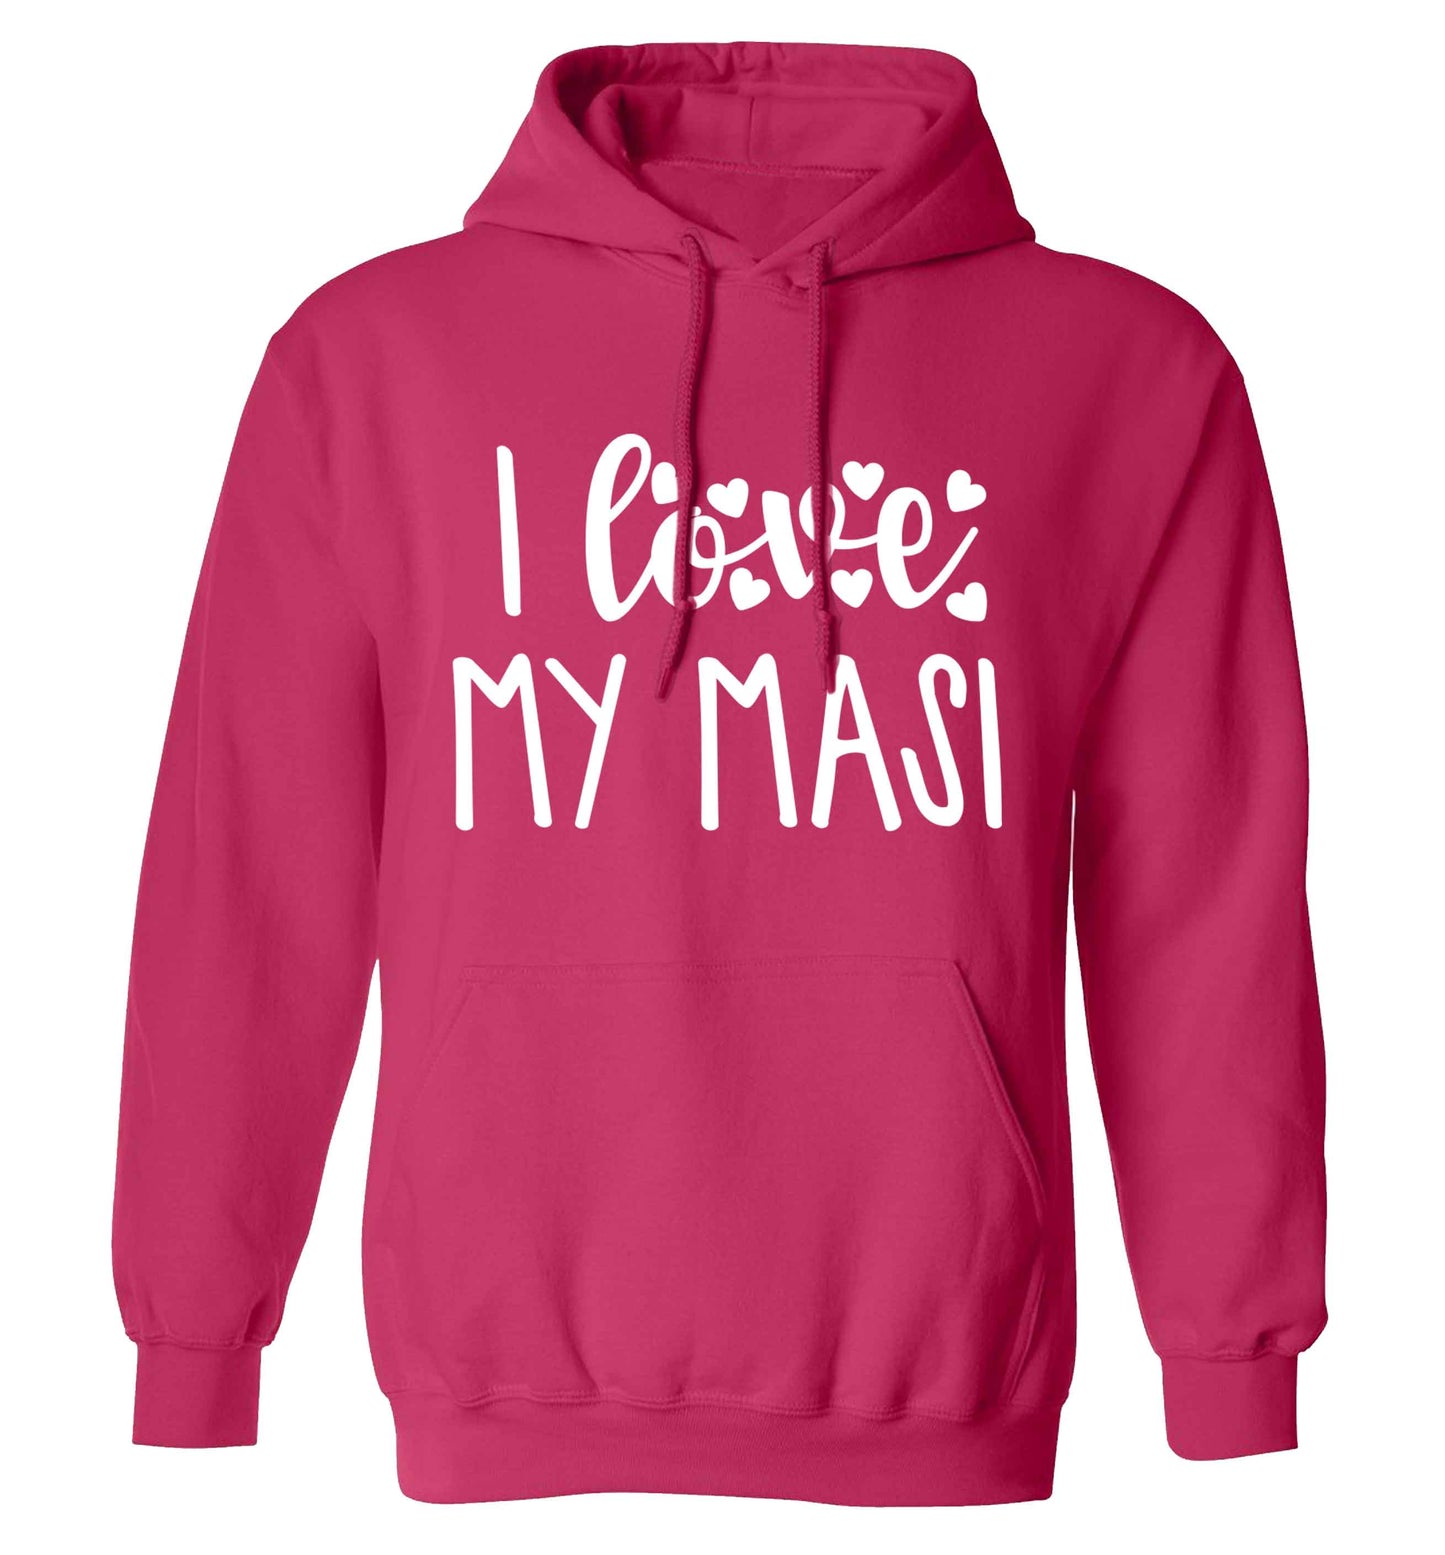 I love my masi adults unisex pink hoodie 2XL